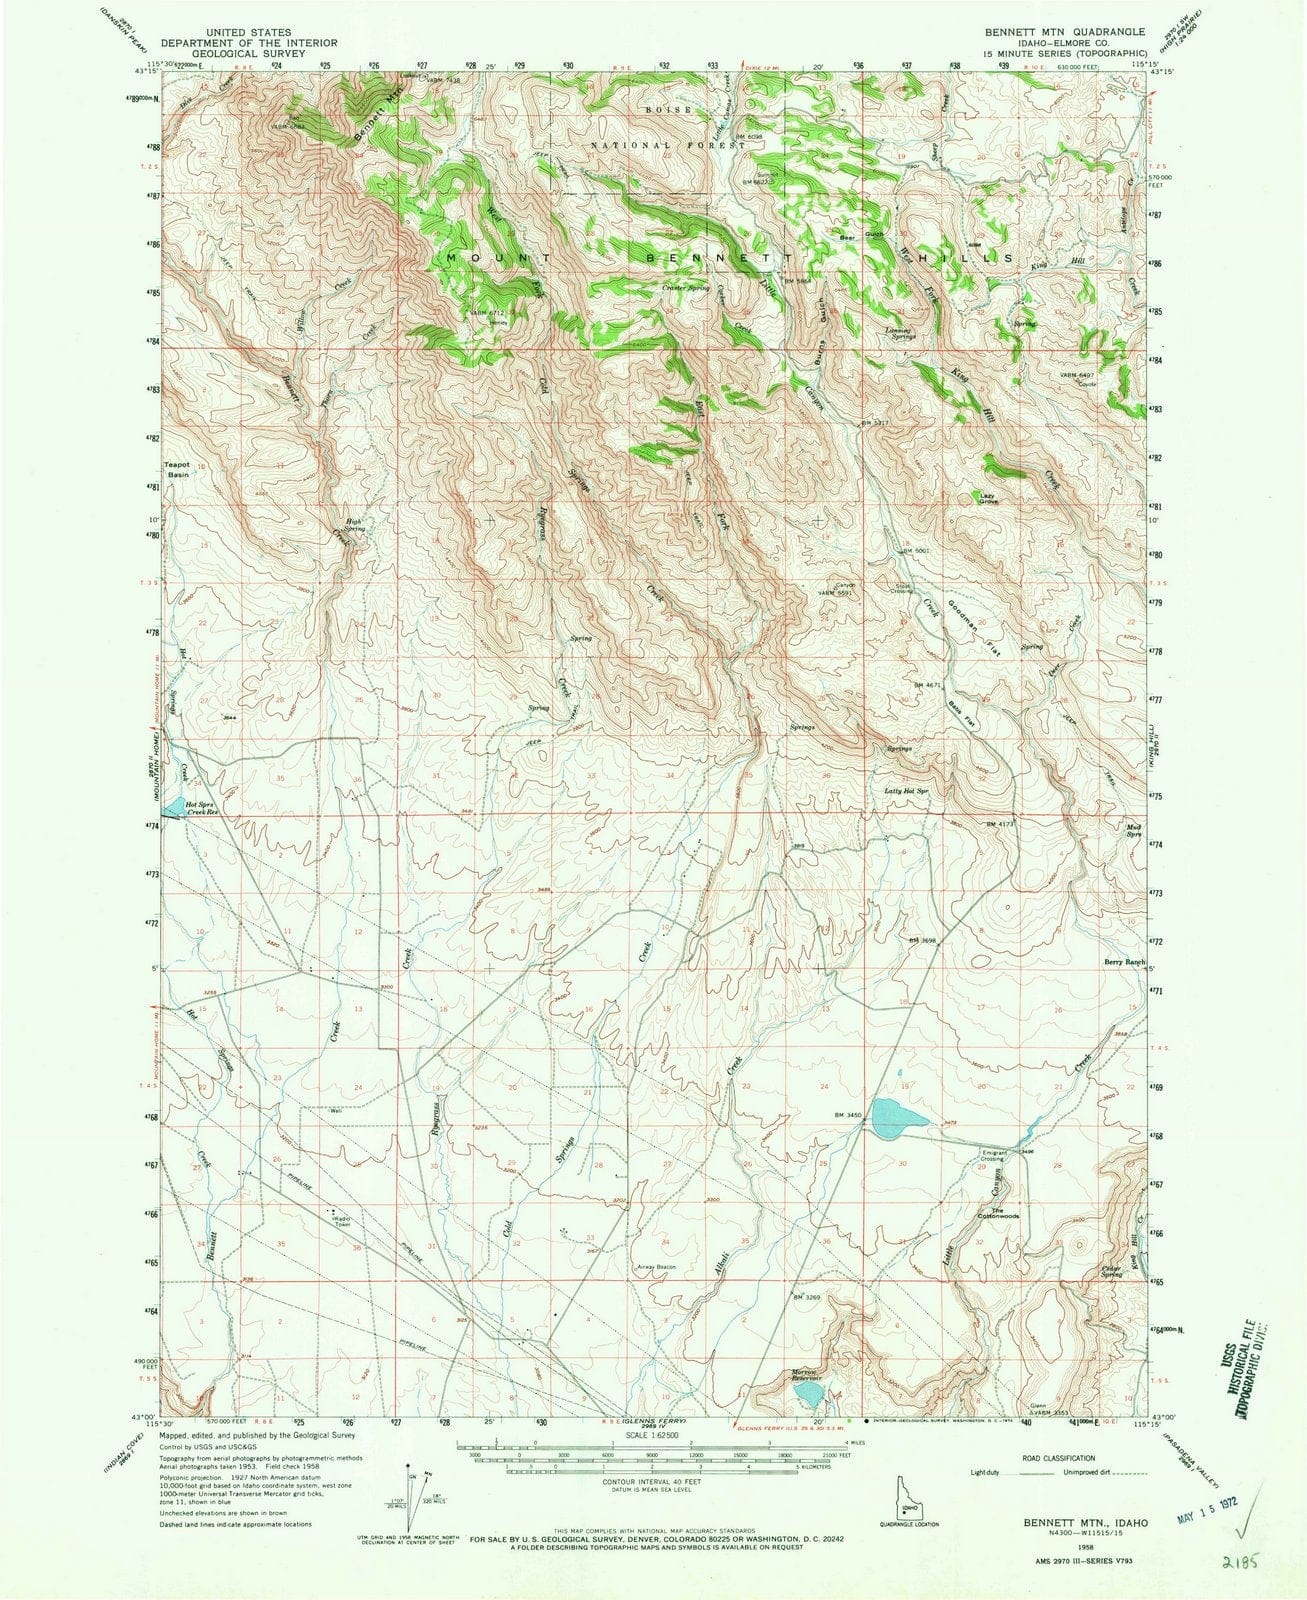 1958 Bennett MTN, ID - Idaho - USGS Topographic Map